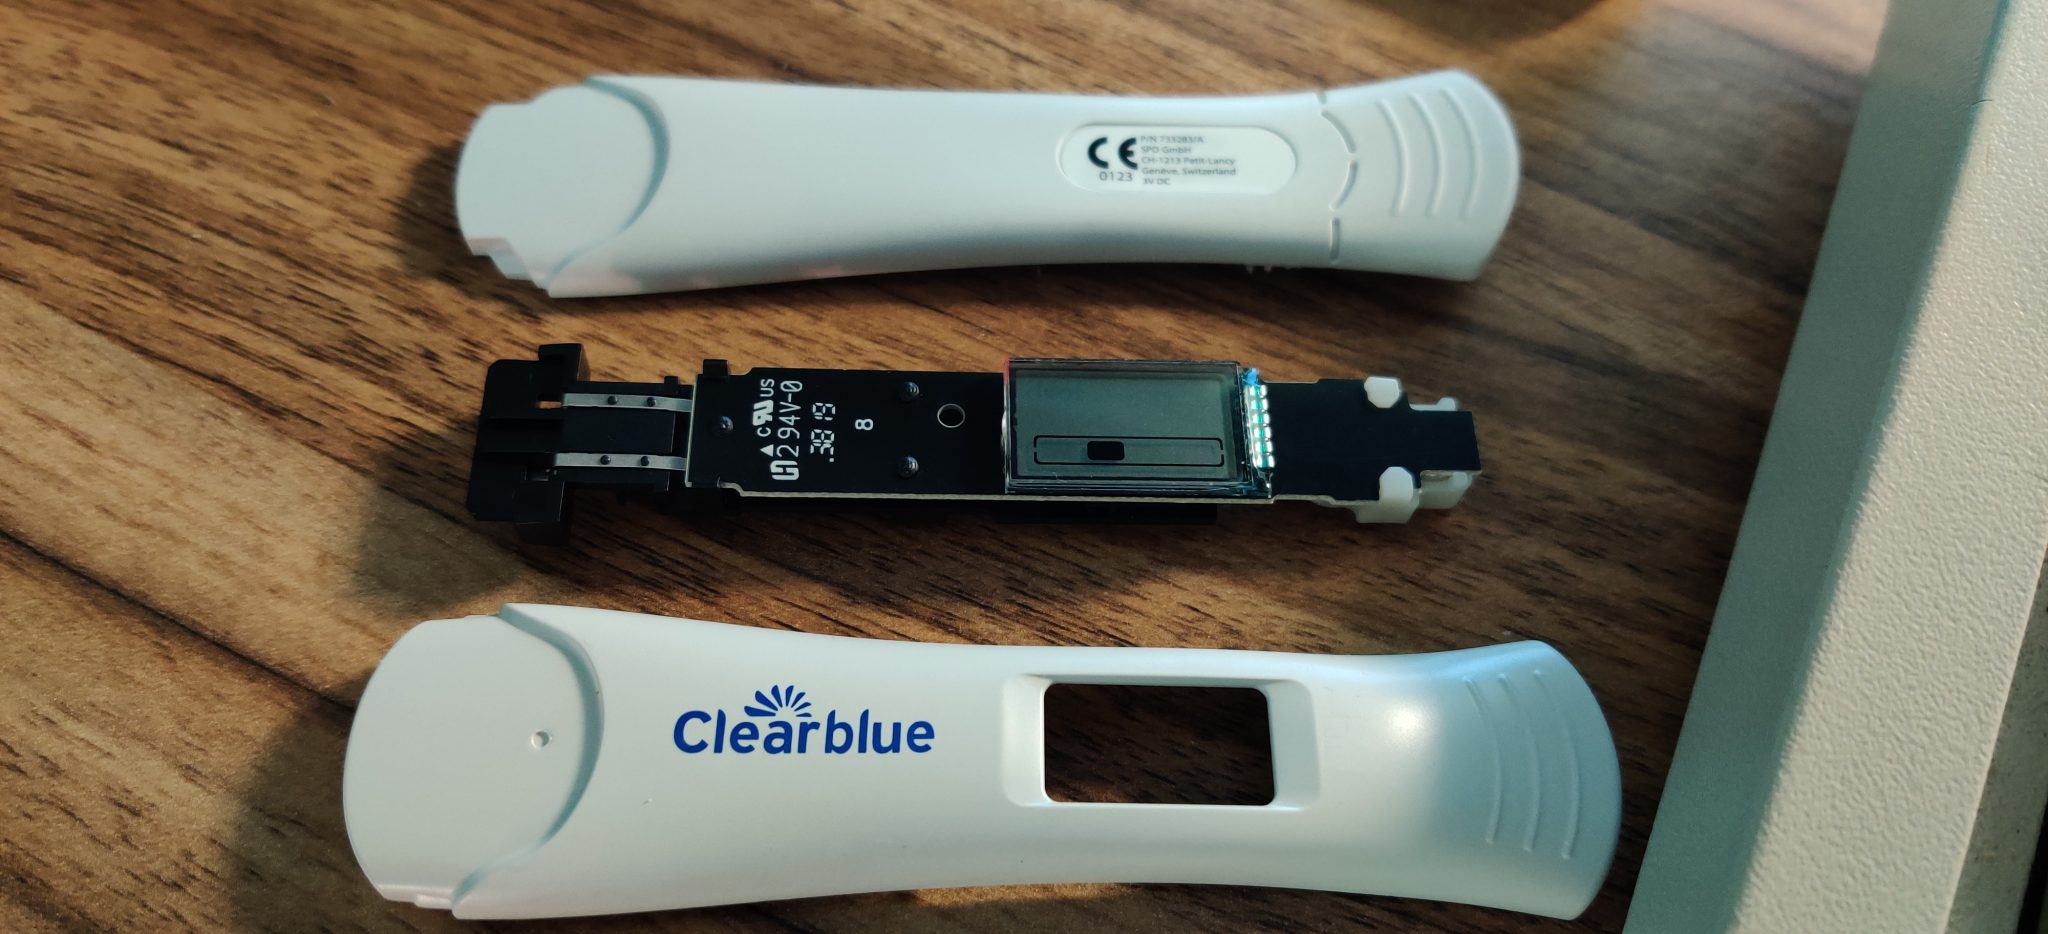 Цифровой электронный тест. Разобранный тест Clearblue цифровой положительный. Электронный тест на беременность. Электронный тестер на беременность. Положительный тест на беременность электронный.